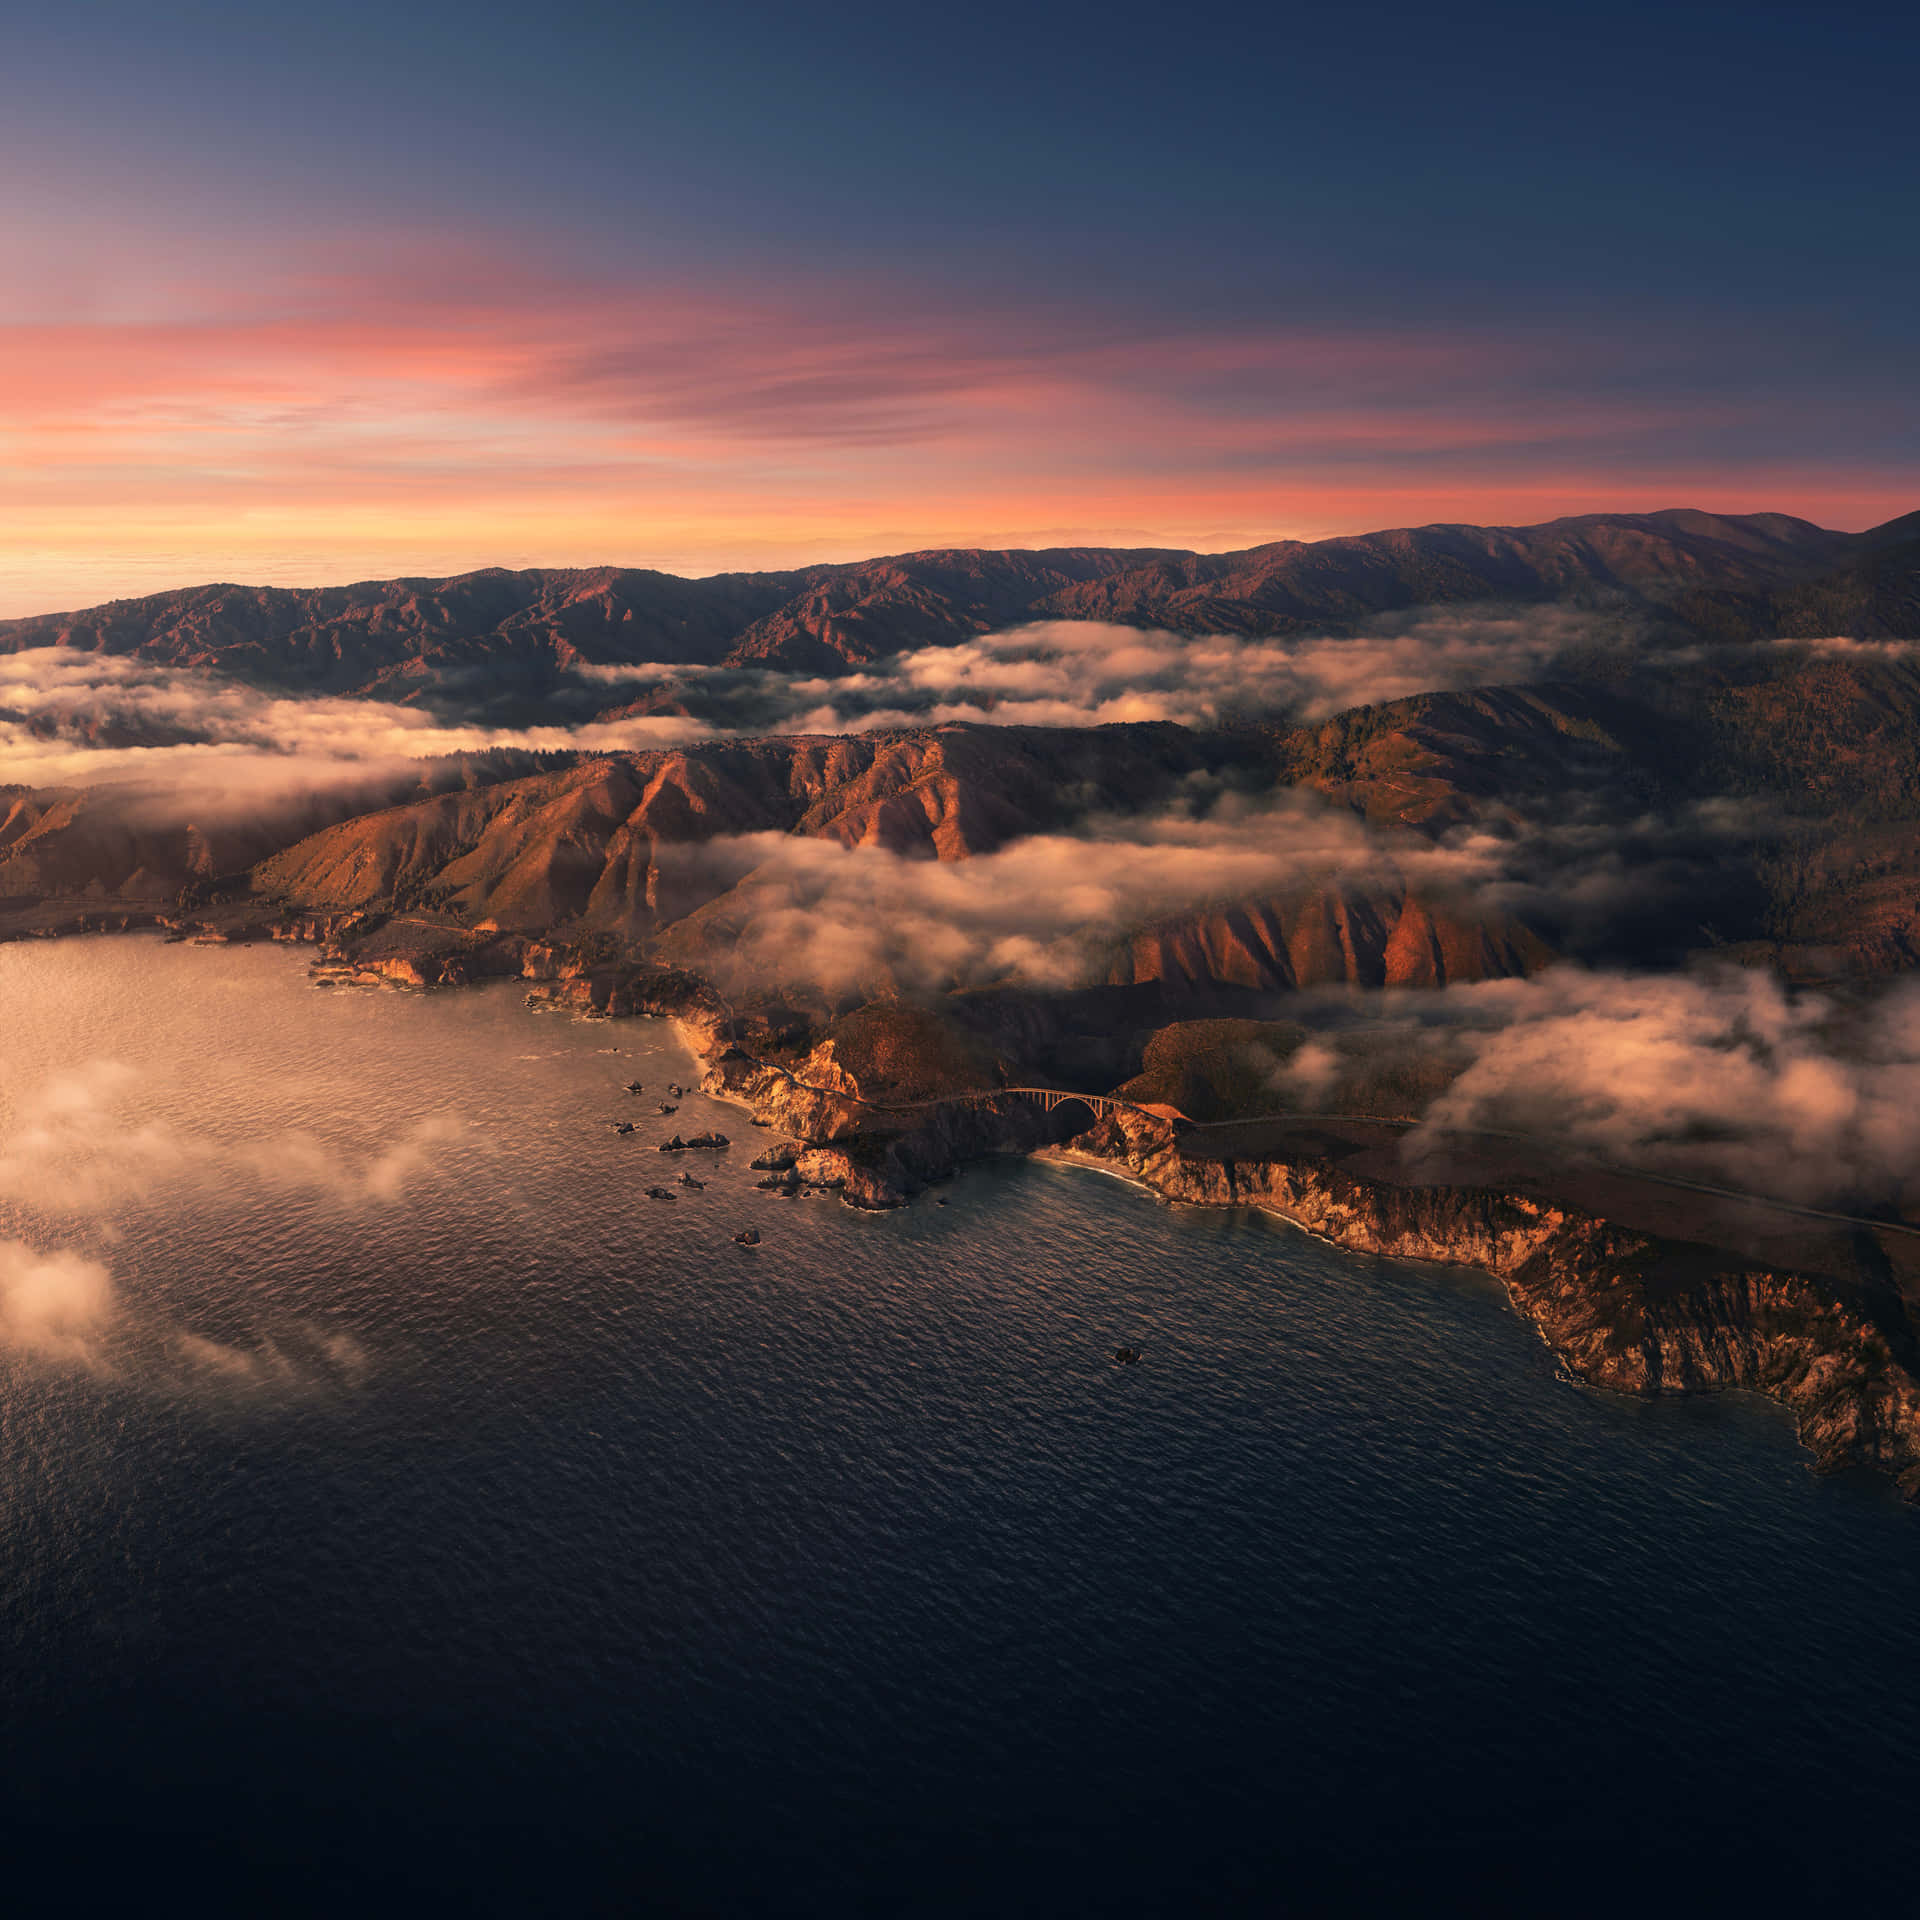 Take in the beautiful landscape of Big Sur, California